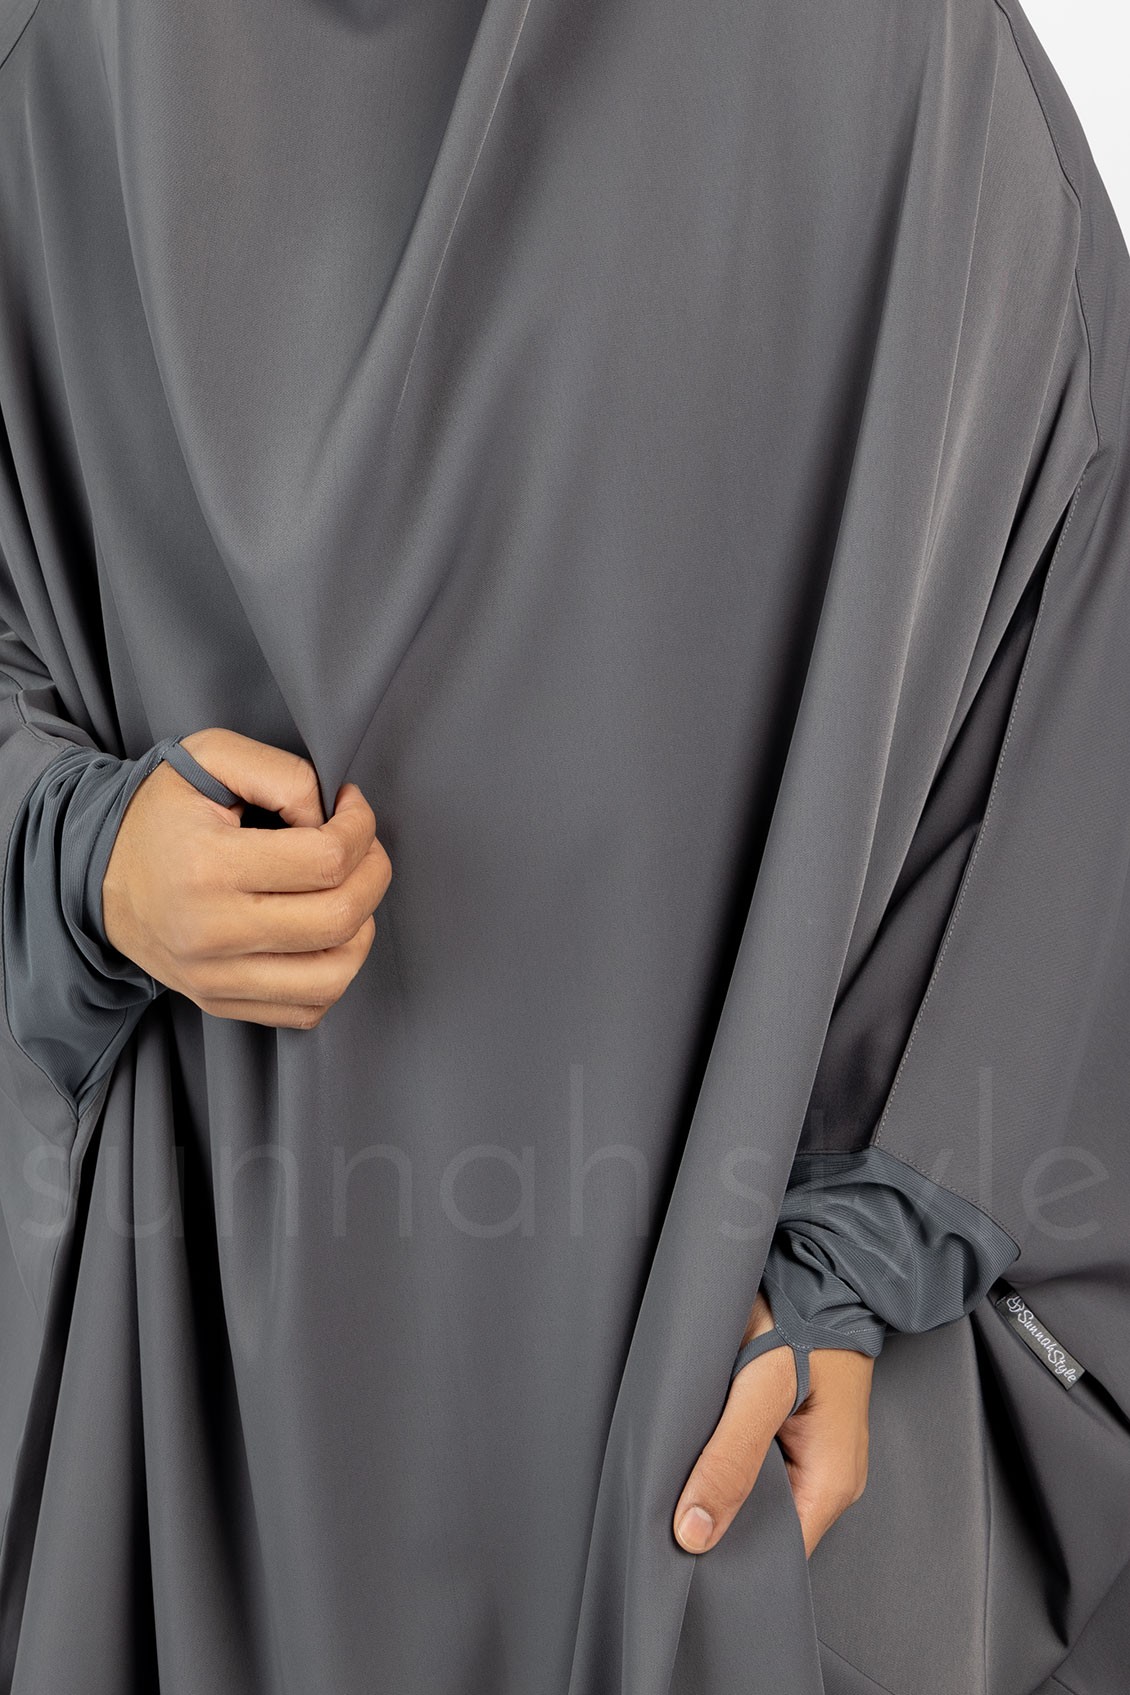 Sunnah Style Signature Jilbab Top Knee Length Pewter